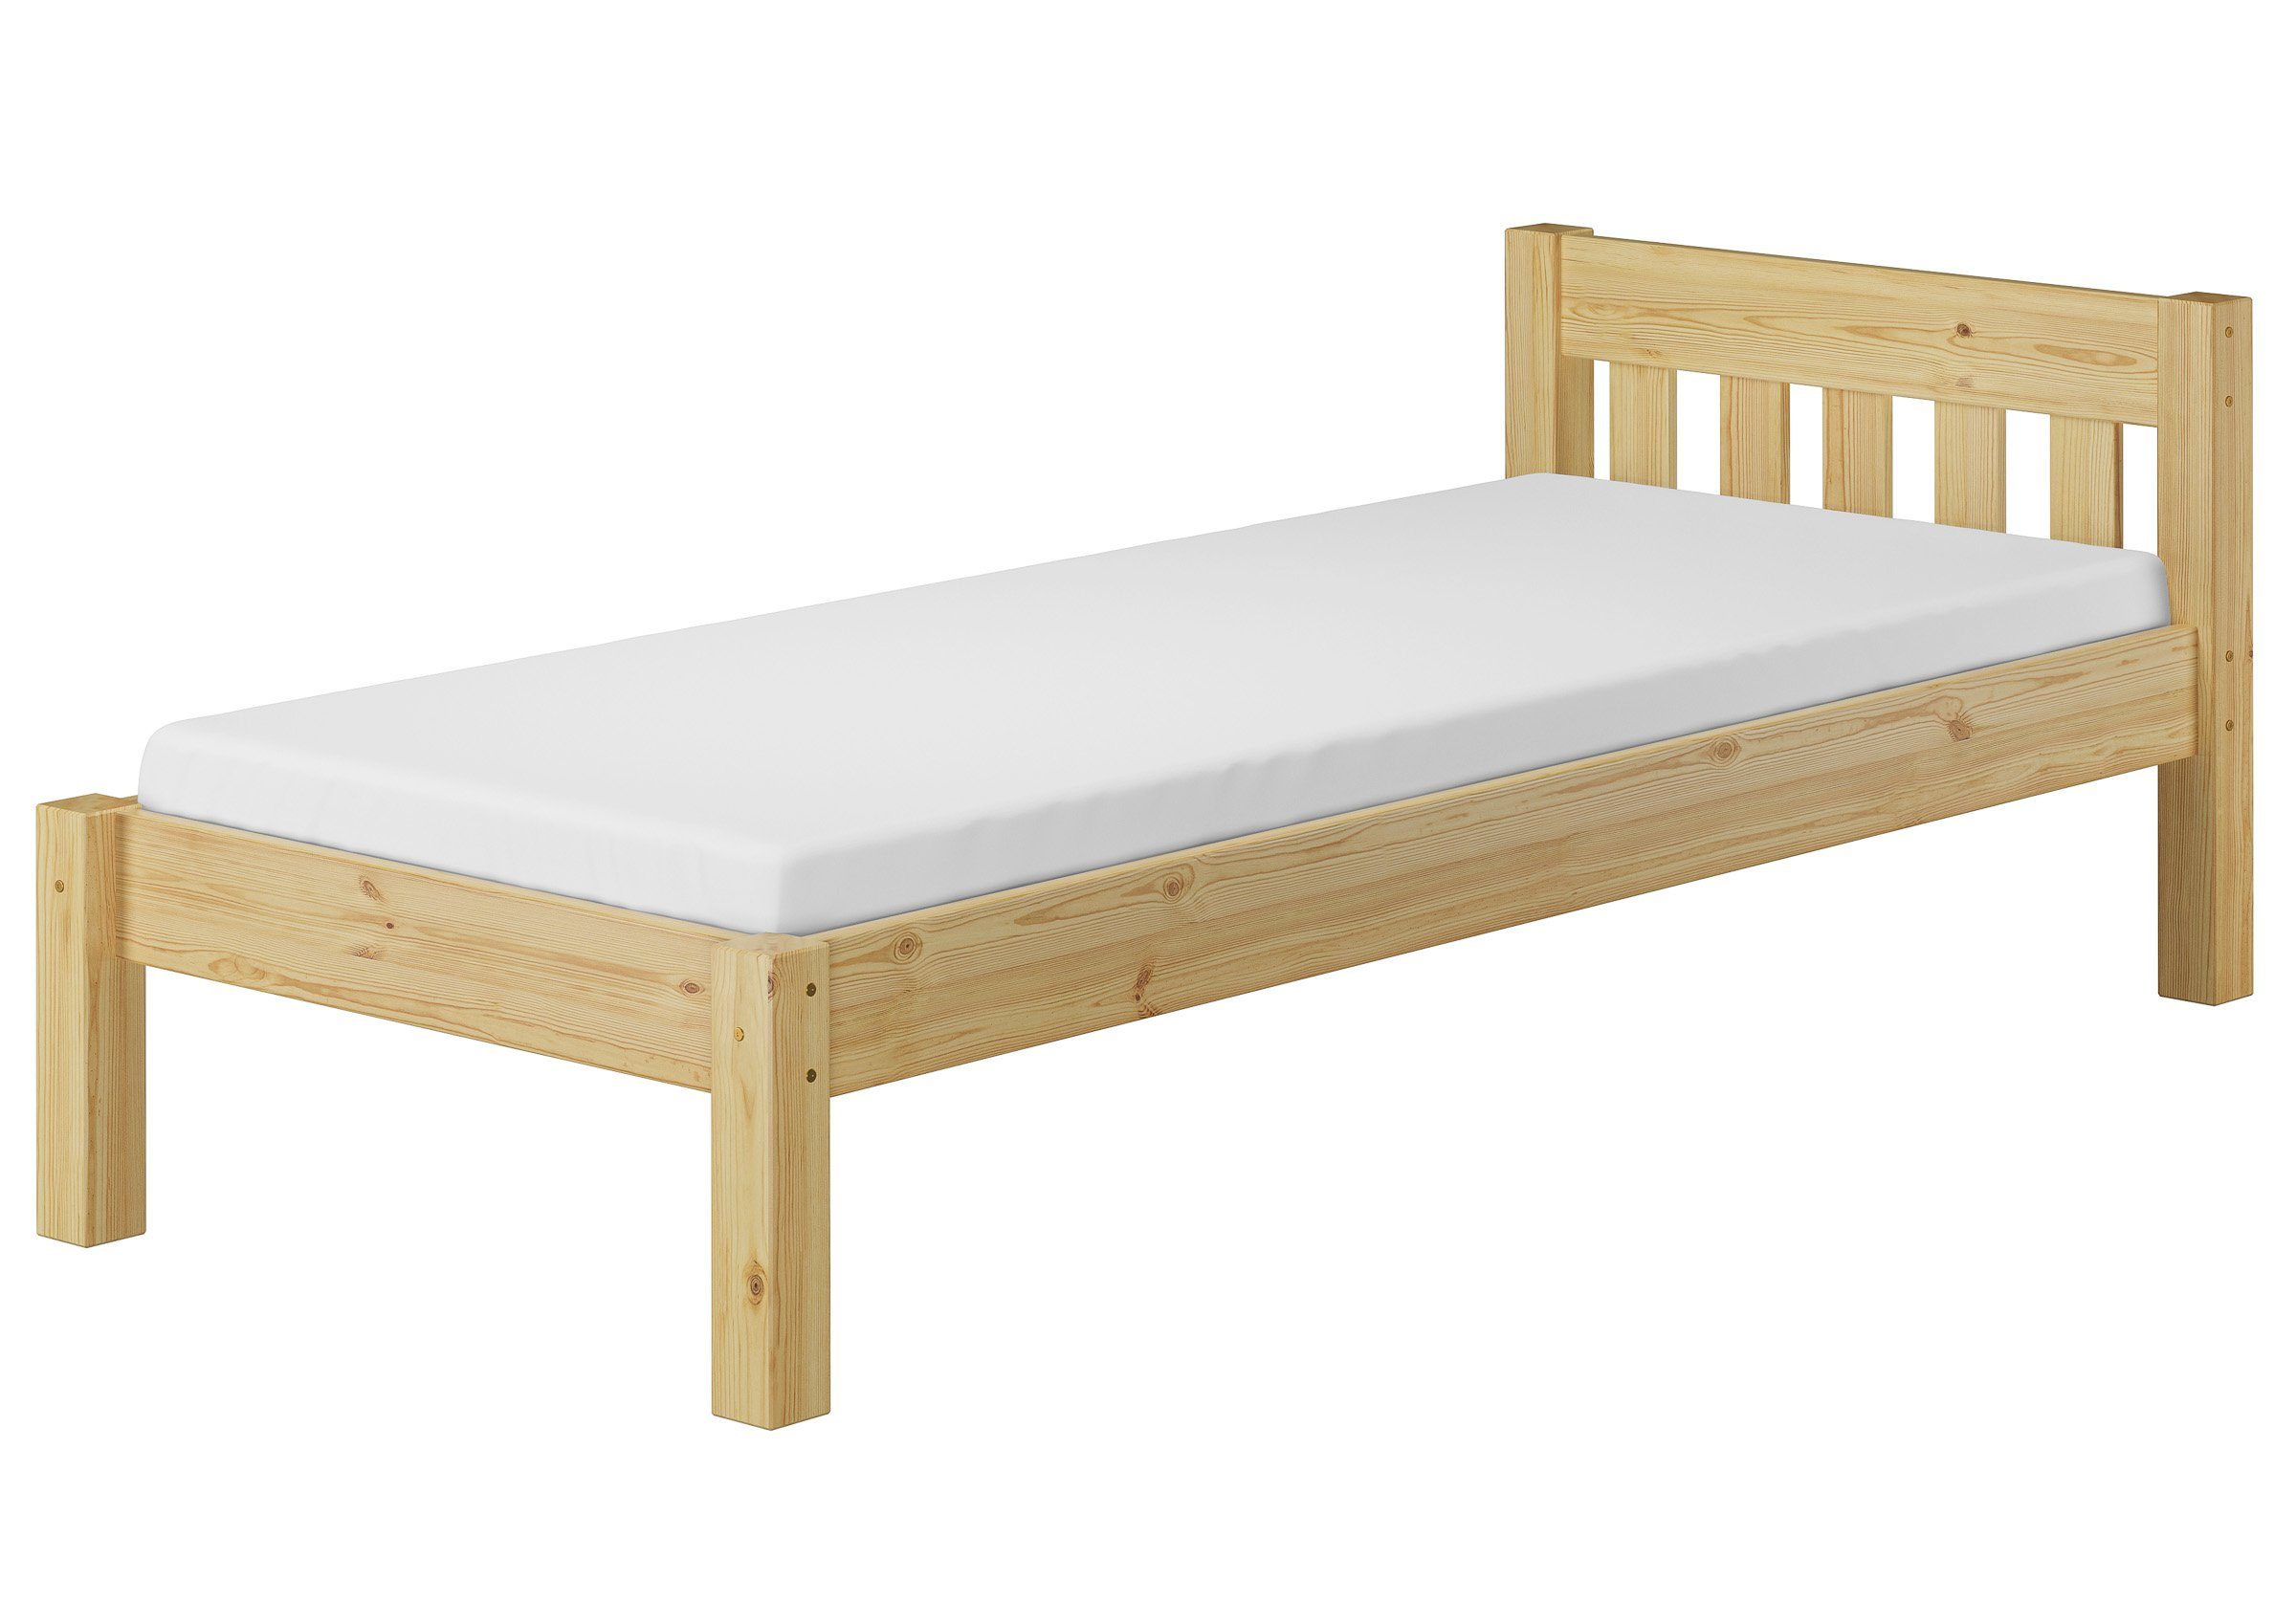 ERST-HOLZ Bett Kinderbett Massivholz 80x200 mit Federholzrahmen und Matratze, Kieferfarblos lackiert